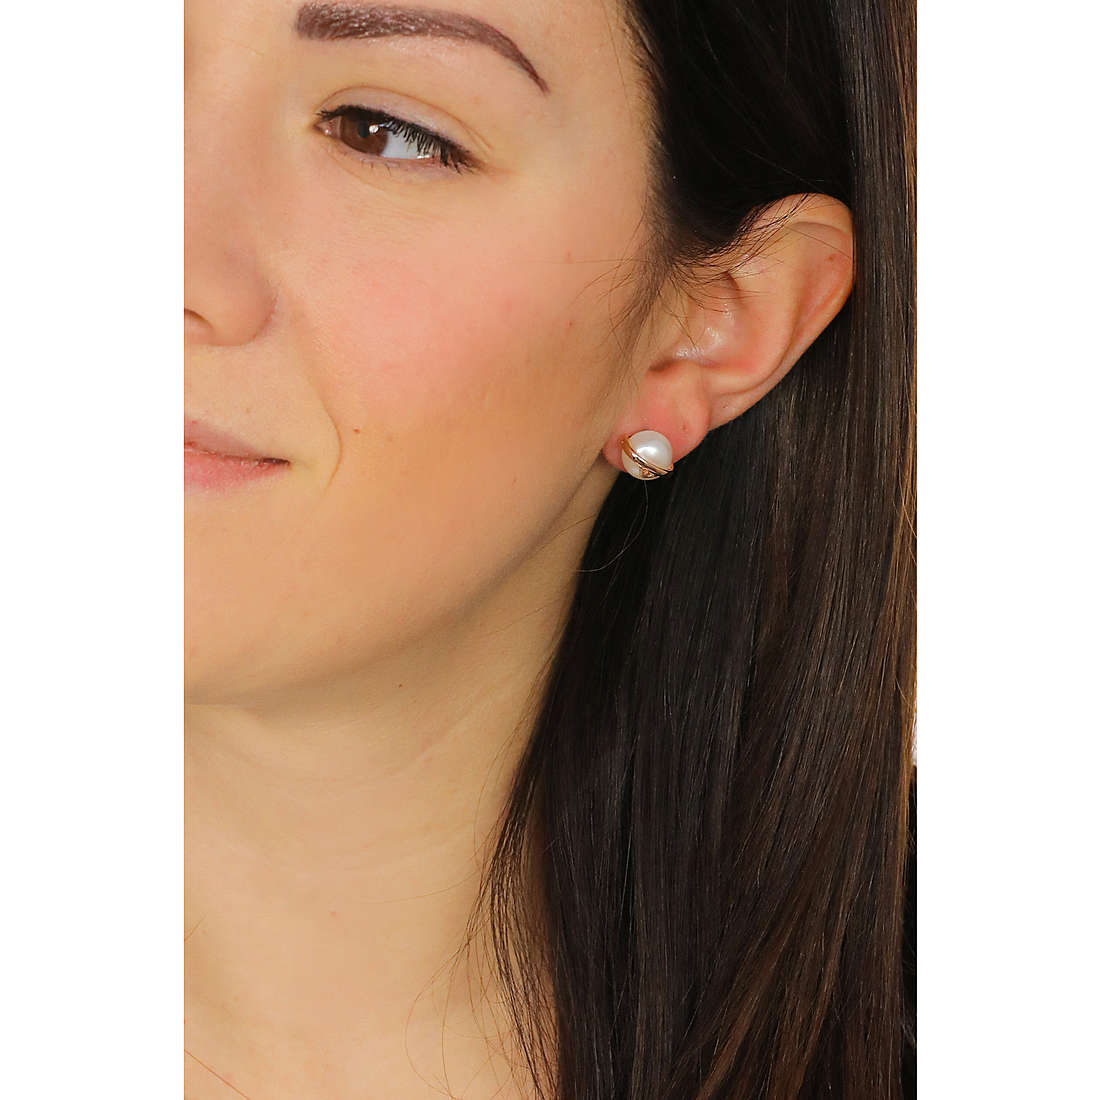 Emporio Armani earrings woman EG3535221 wearing